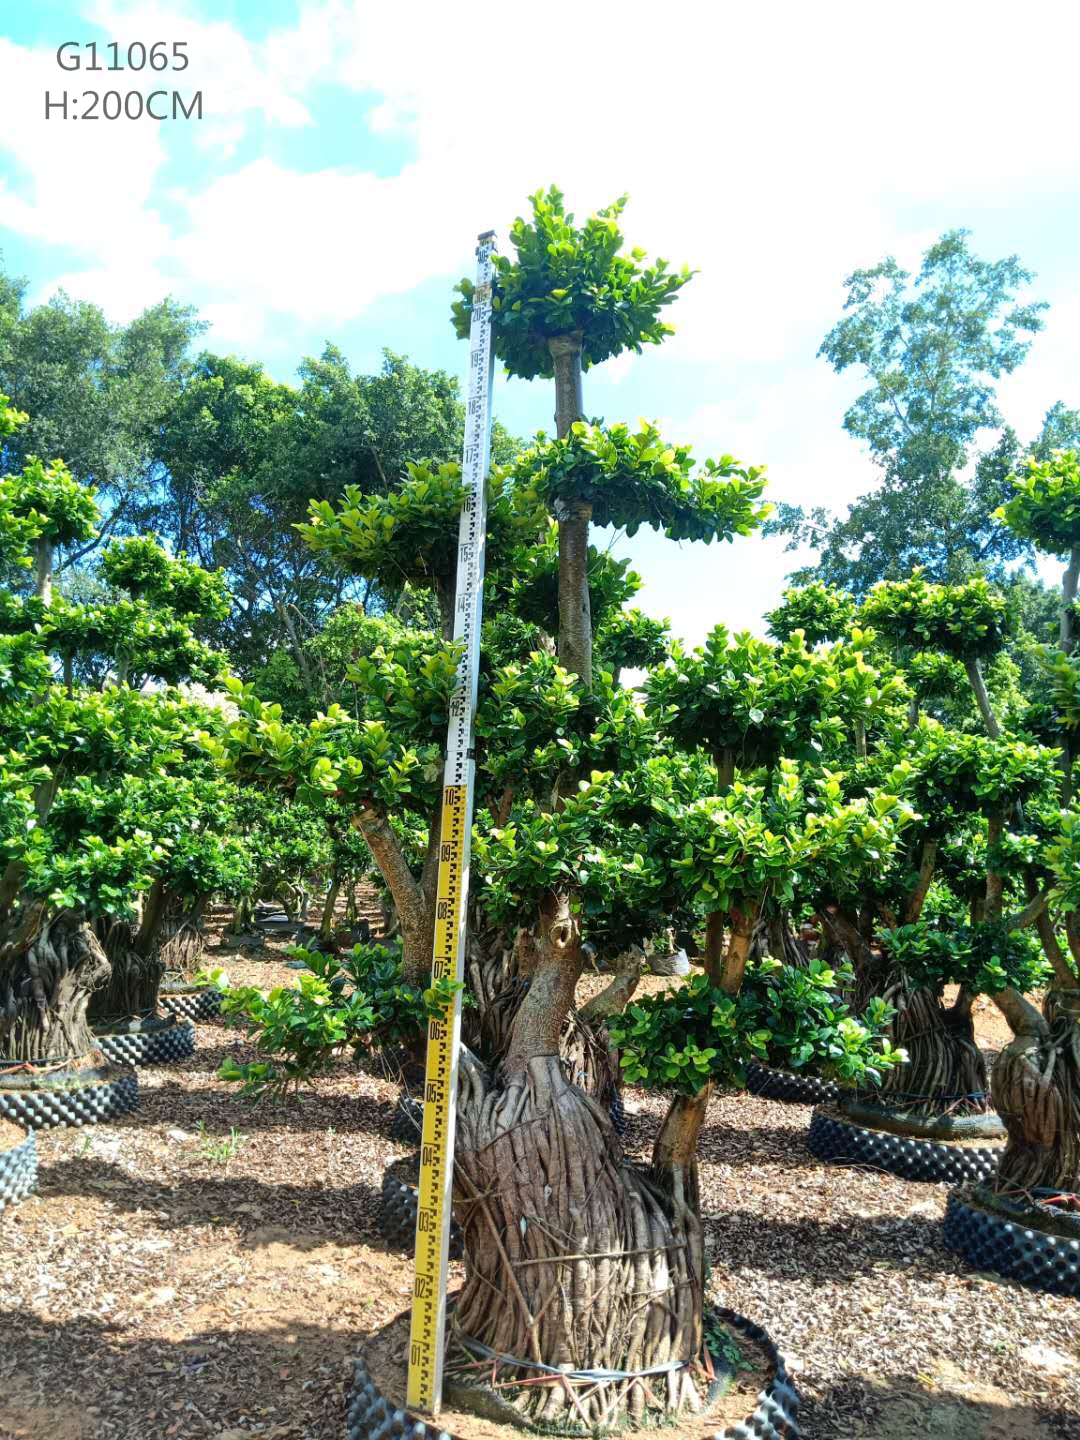 H150-210cm Ficus Cua hauv paus S Loj Ficus Microcarpa Ficus Bonsai Nrog Zoo Zoo